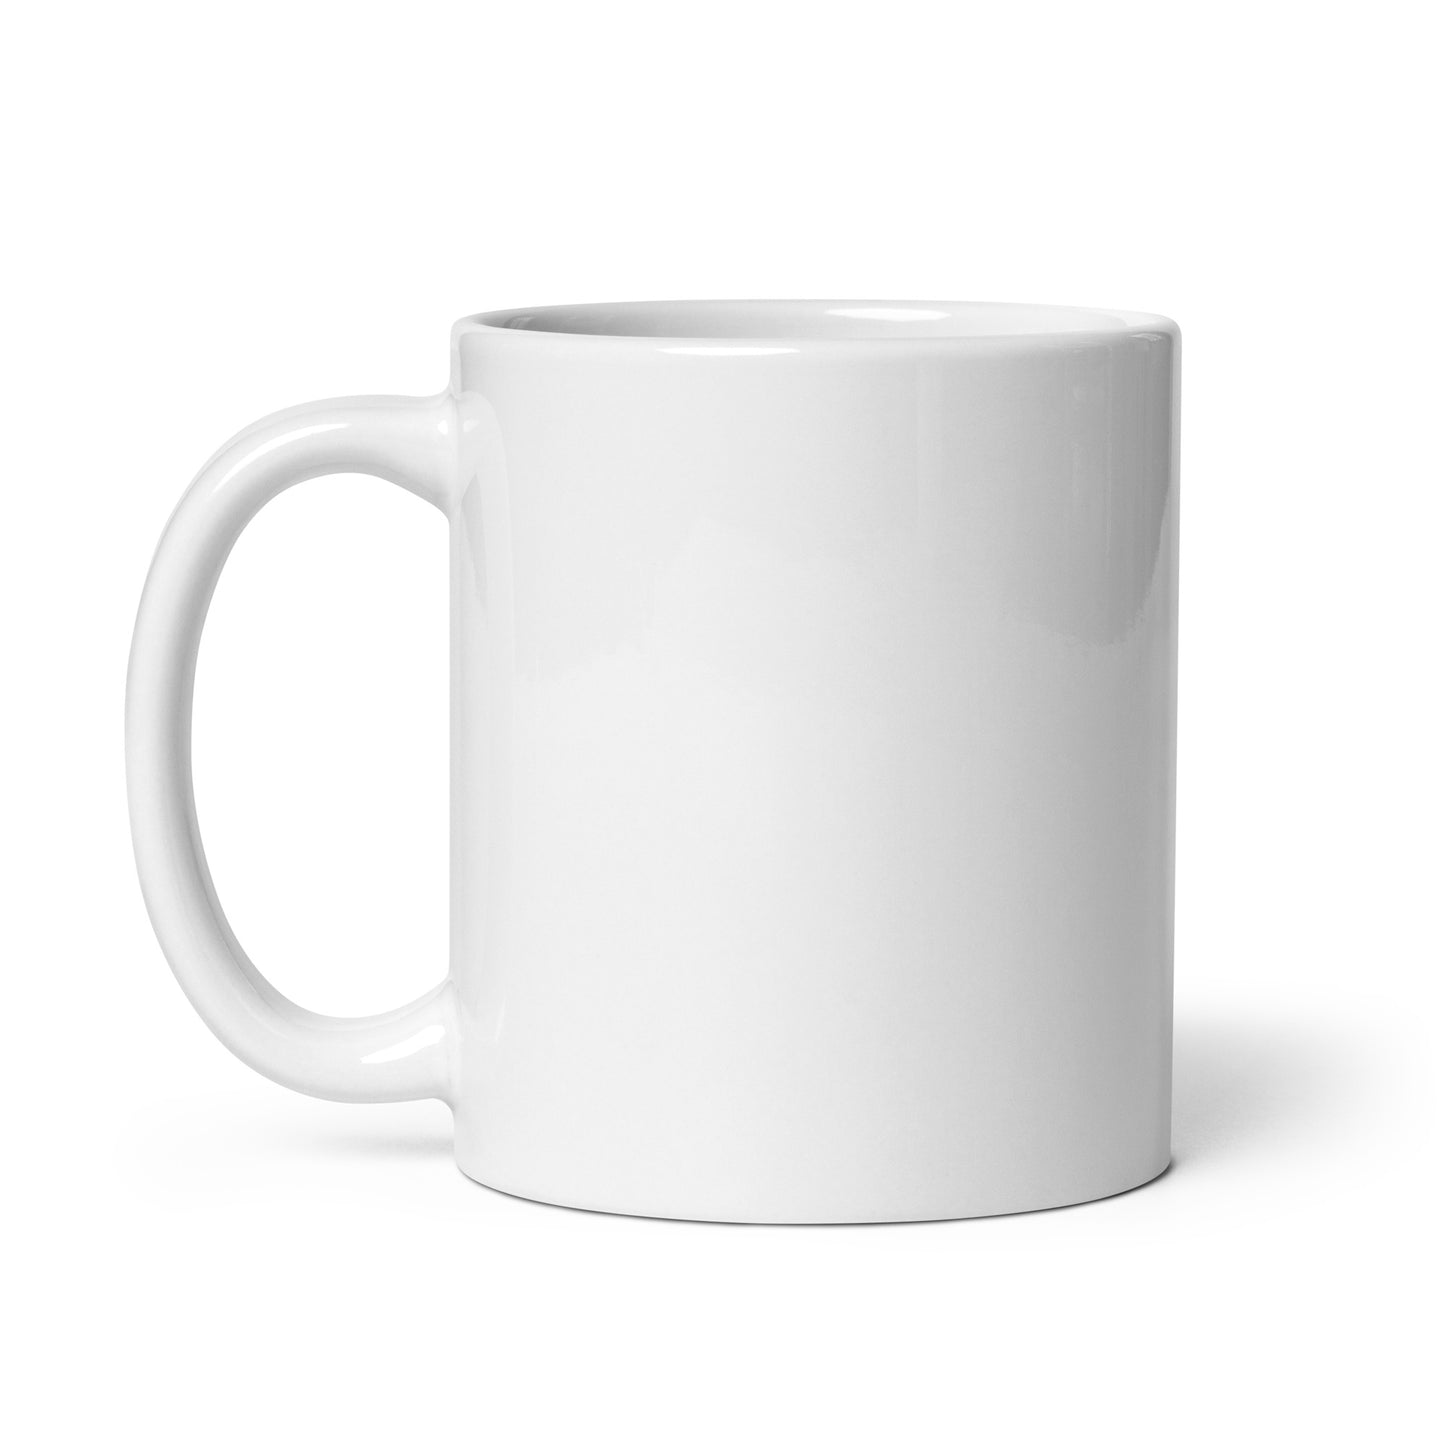 Pumpkin's Favorite Comedian - White glossy mug - Premium  from T&L Kustoms - Just $12.95! Shop now at T&L Kustoms